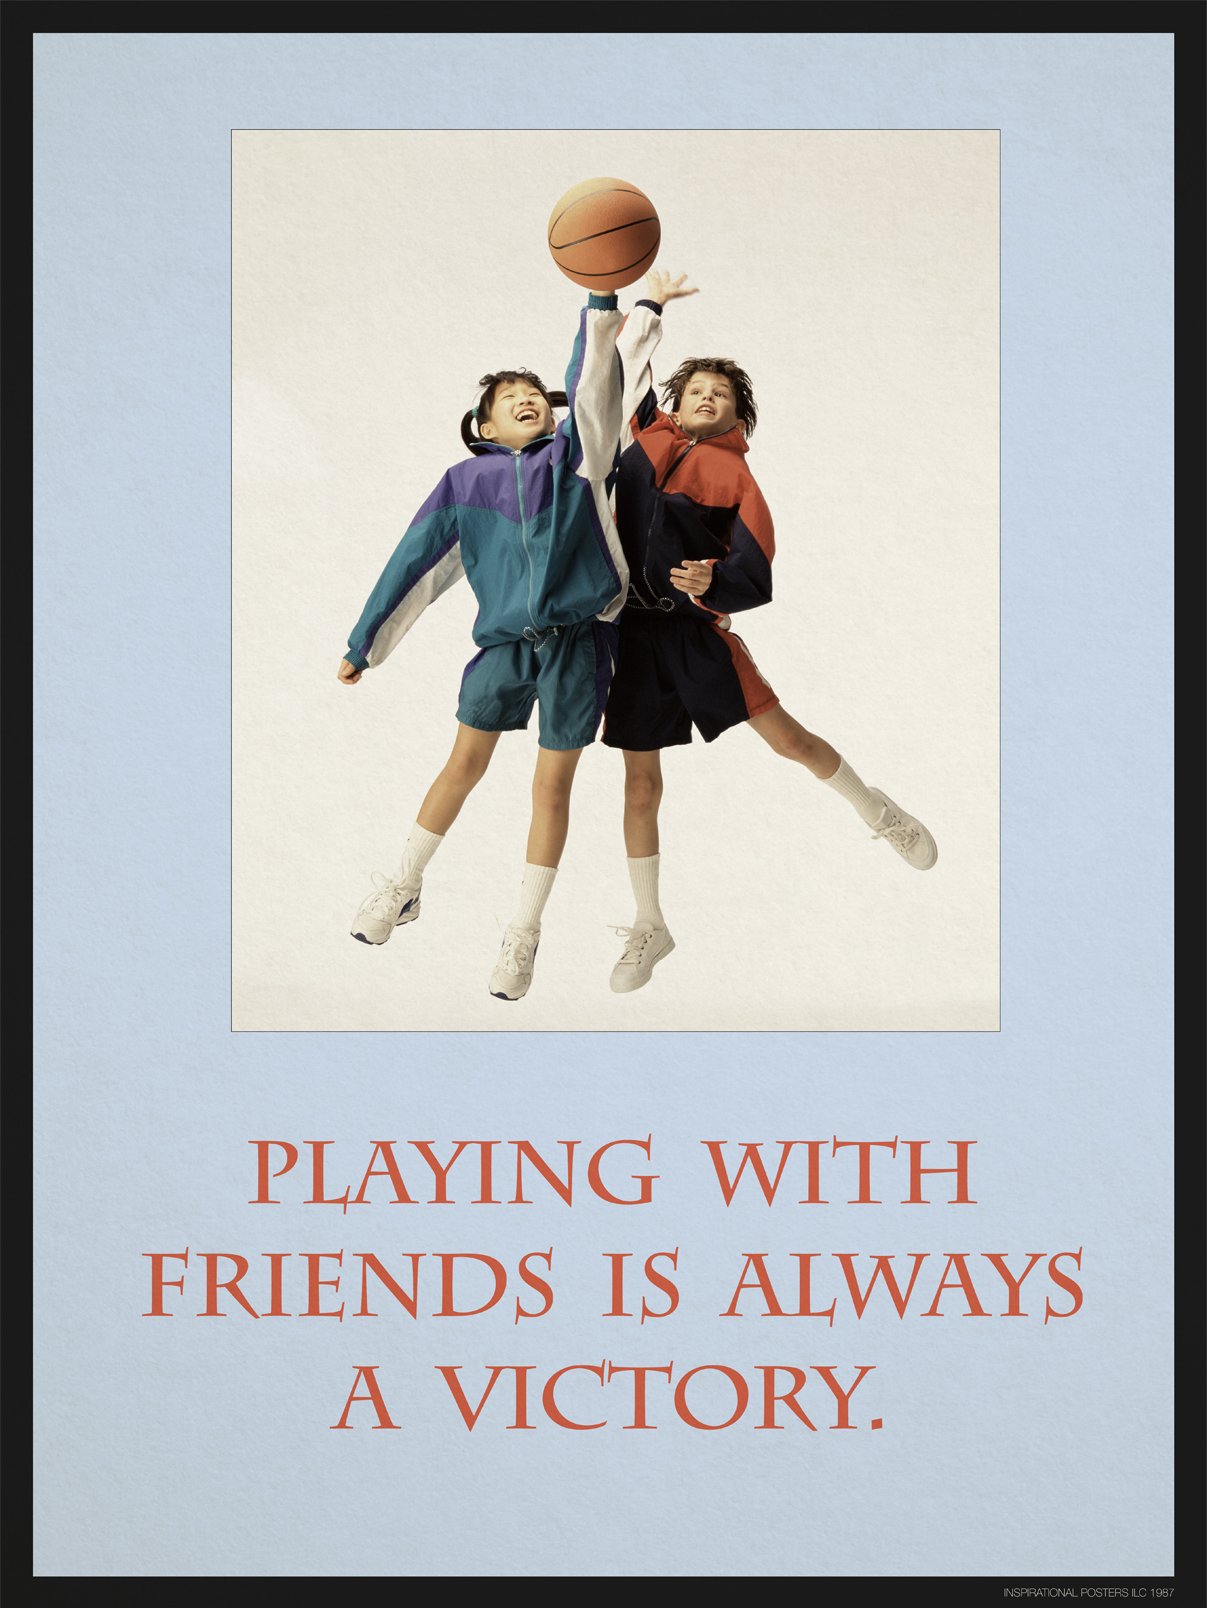 Friendship Victory Gymnasium Poster